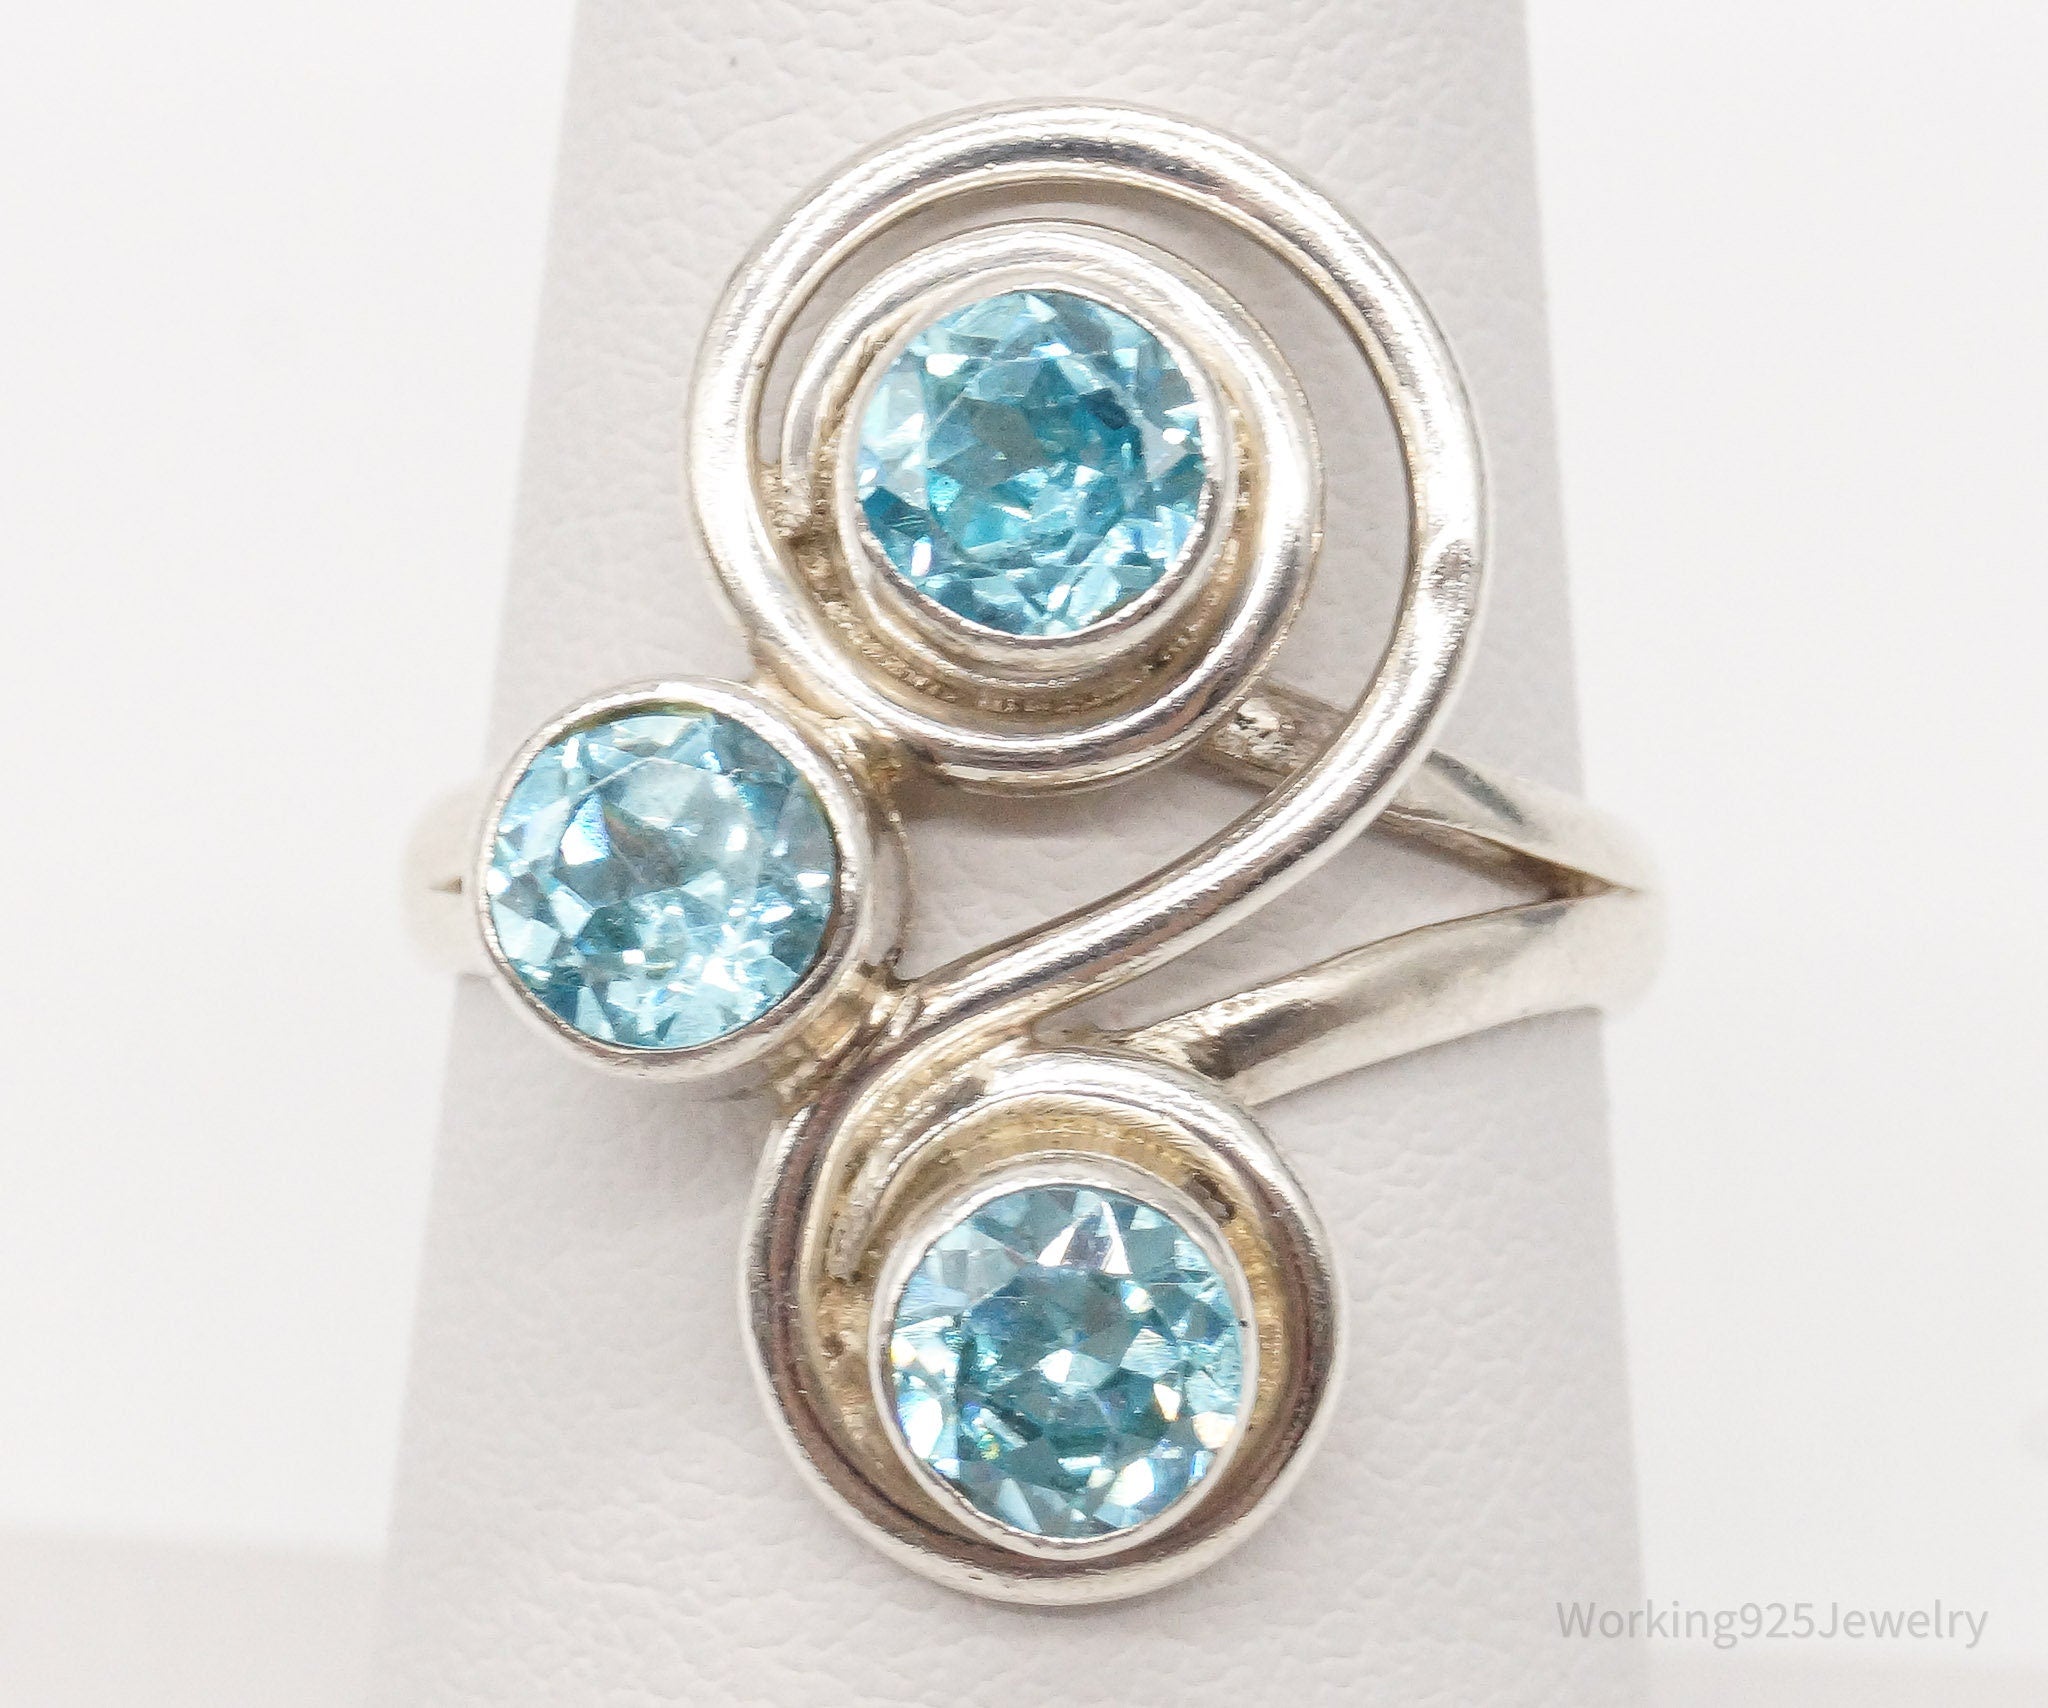 Vintage Aquamarine Sterling Silver Ring - Size 7